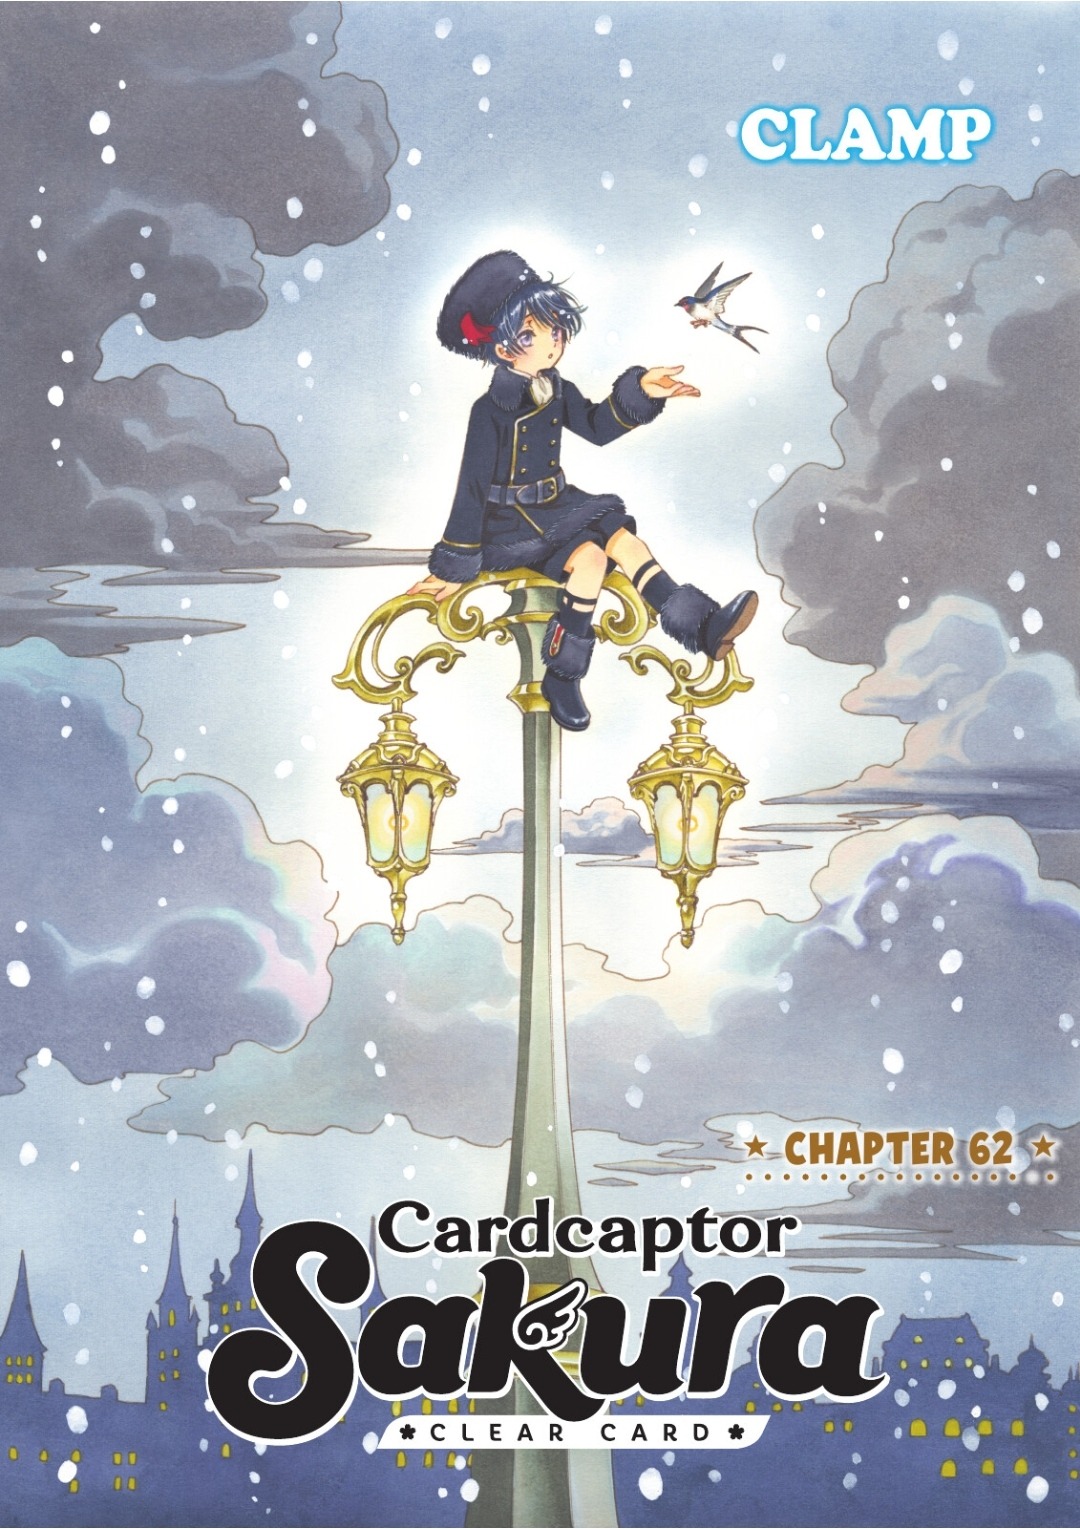 Read Cardcaptor Sakura - Clear Card Arc Vol.3 Chapter 10 - Manganelo